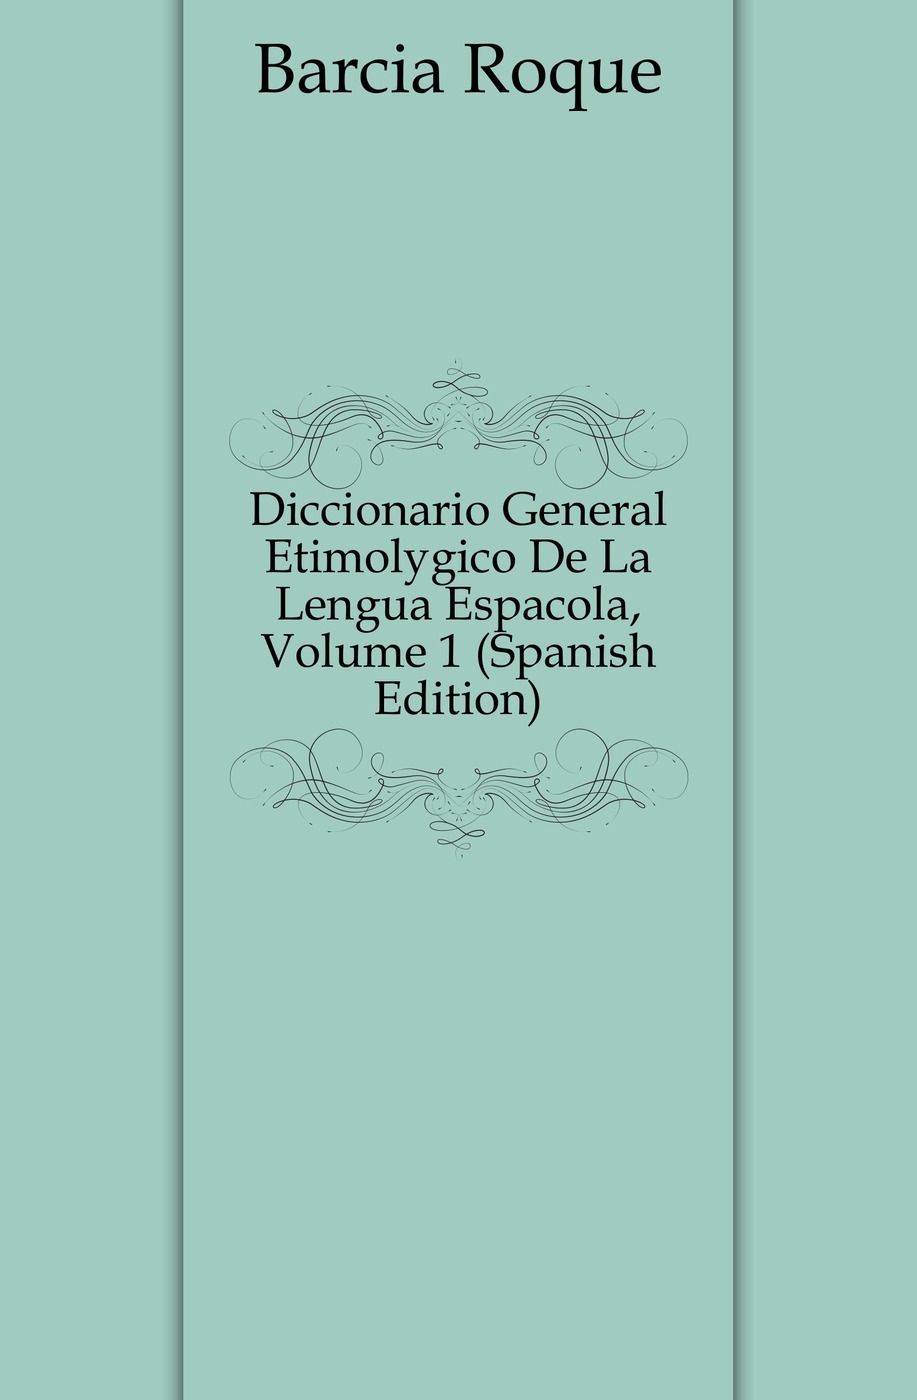 Diccionario General Etimologico De La Lengua Espanola, Volume 1 (Spanish Edition)